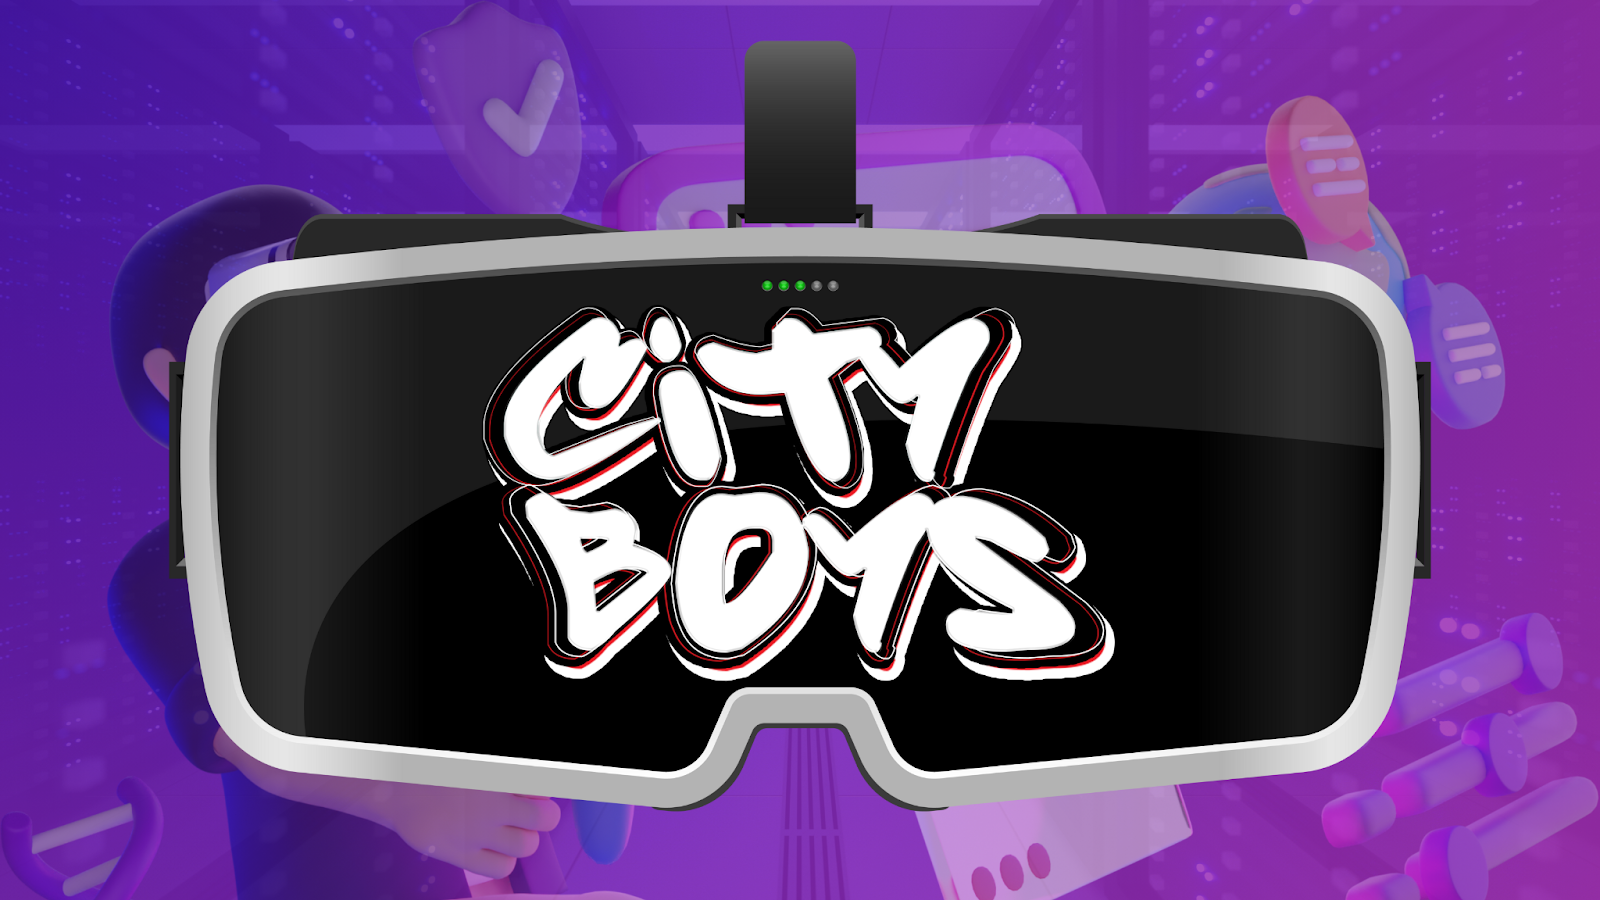 Cityboys: A Revolutionary Cardano Project Set to Dominate 2023